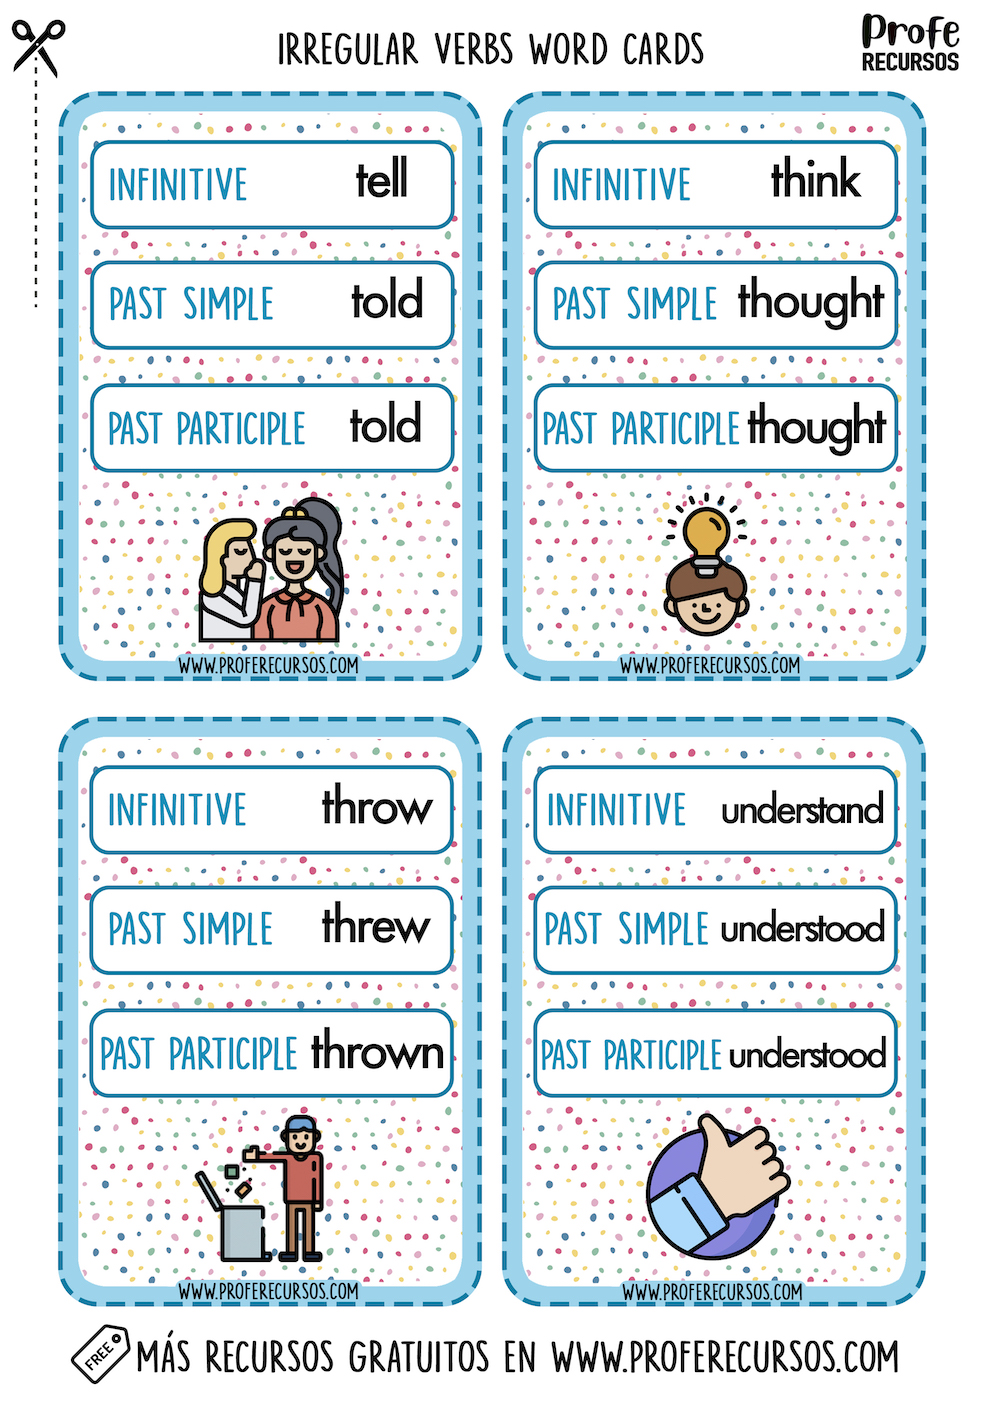 Irregular verbs word cards